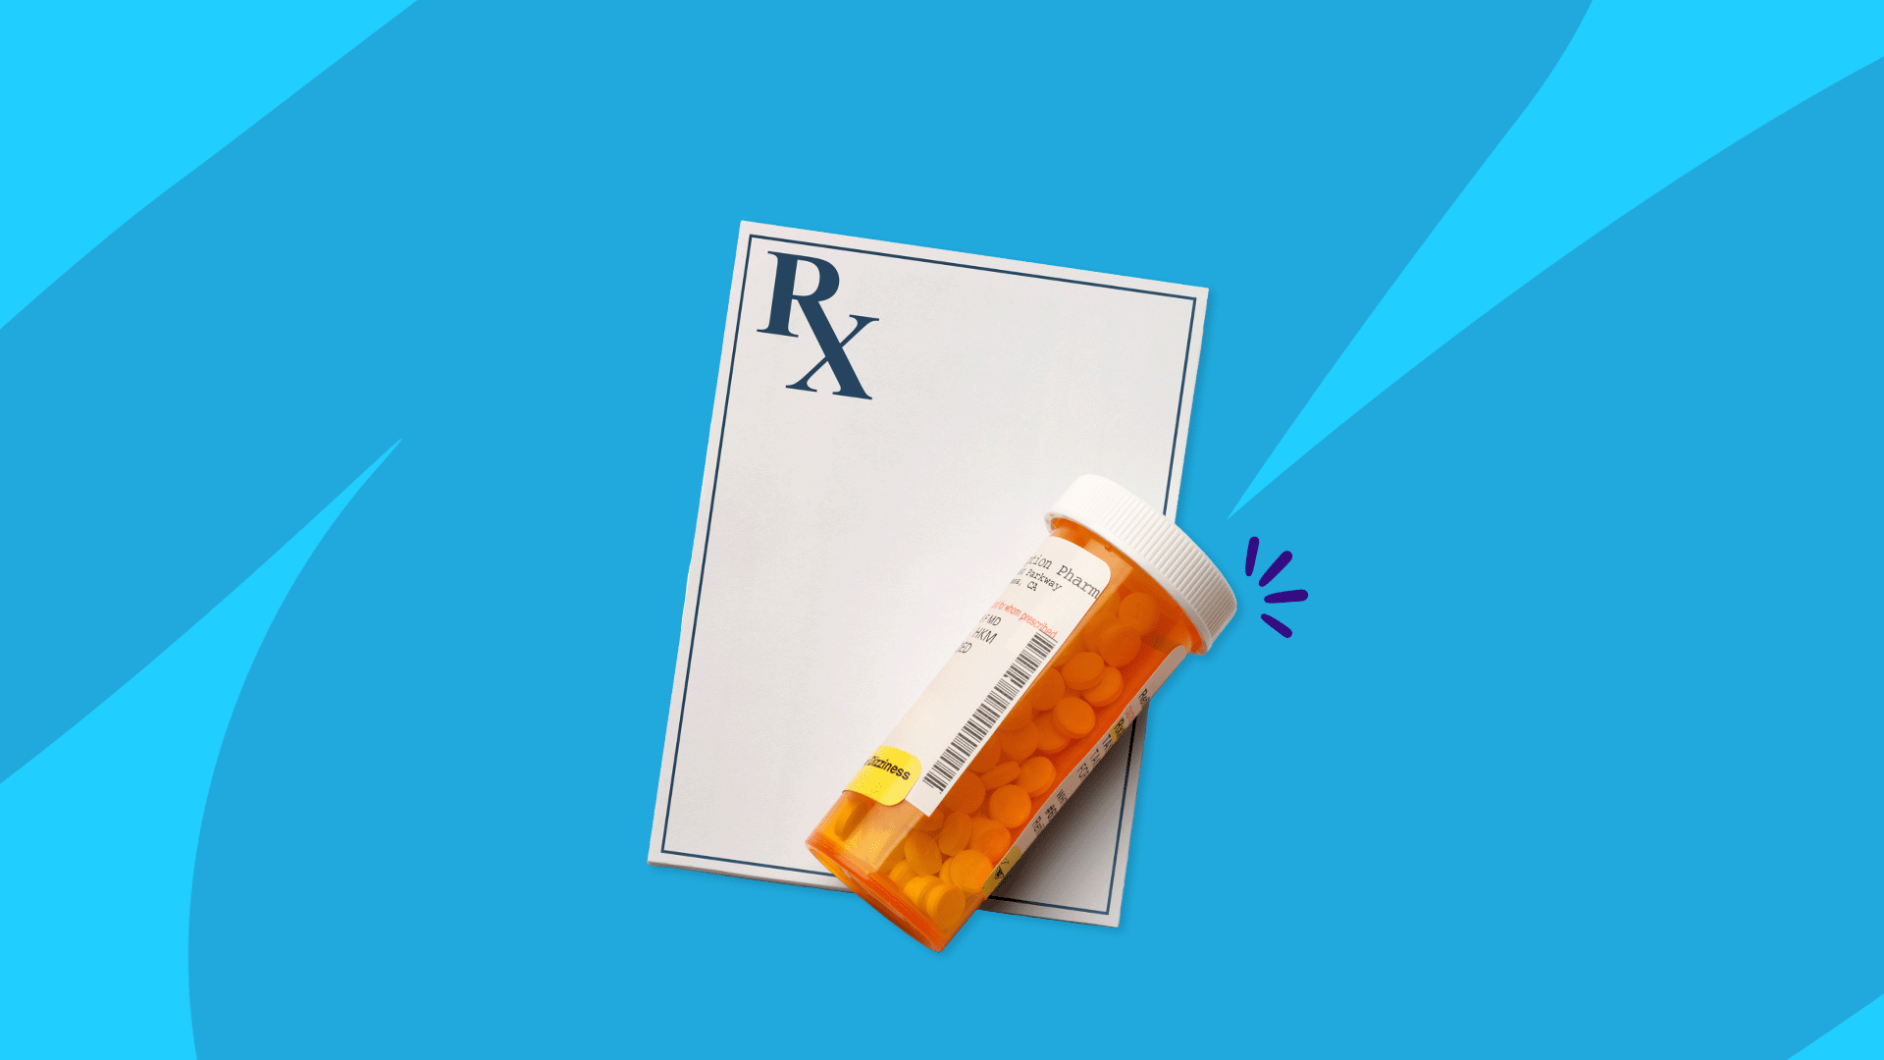 Rx pill bottle and prescription pad: Trazodone interactions